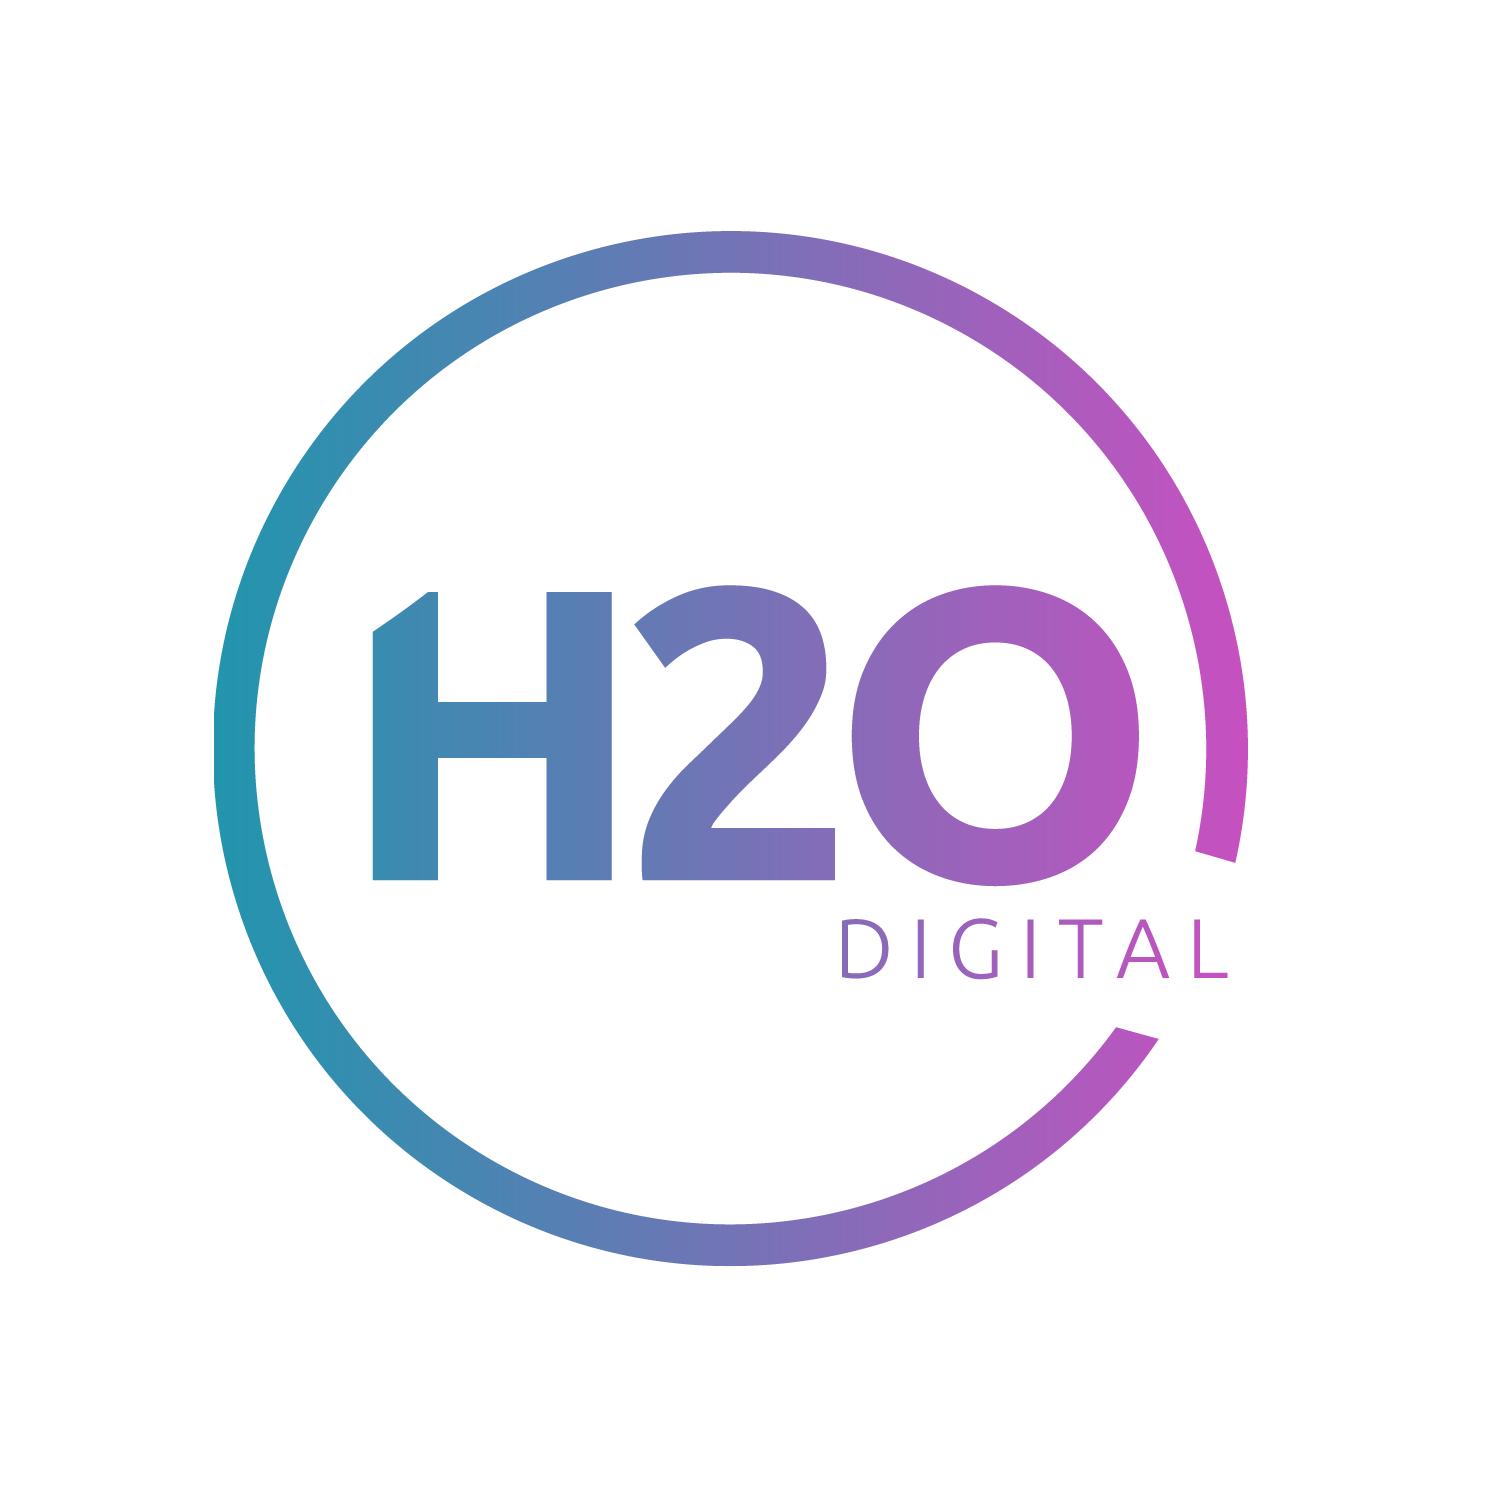 H2O Digital Marketing Agency profile on Qualified.One